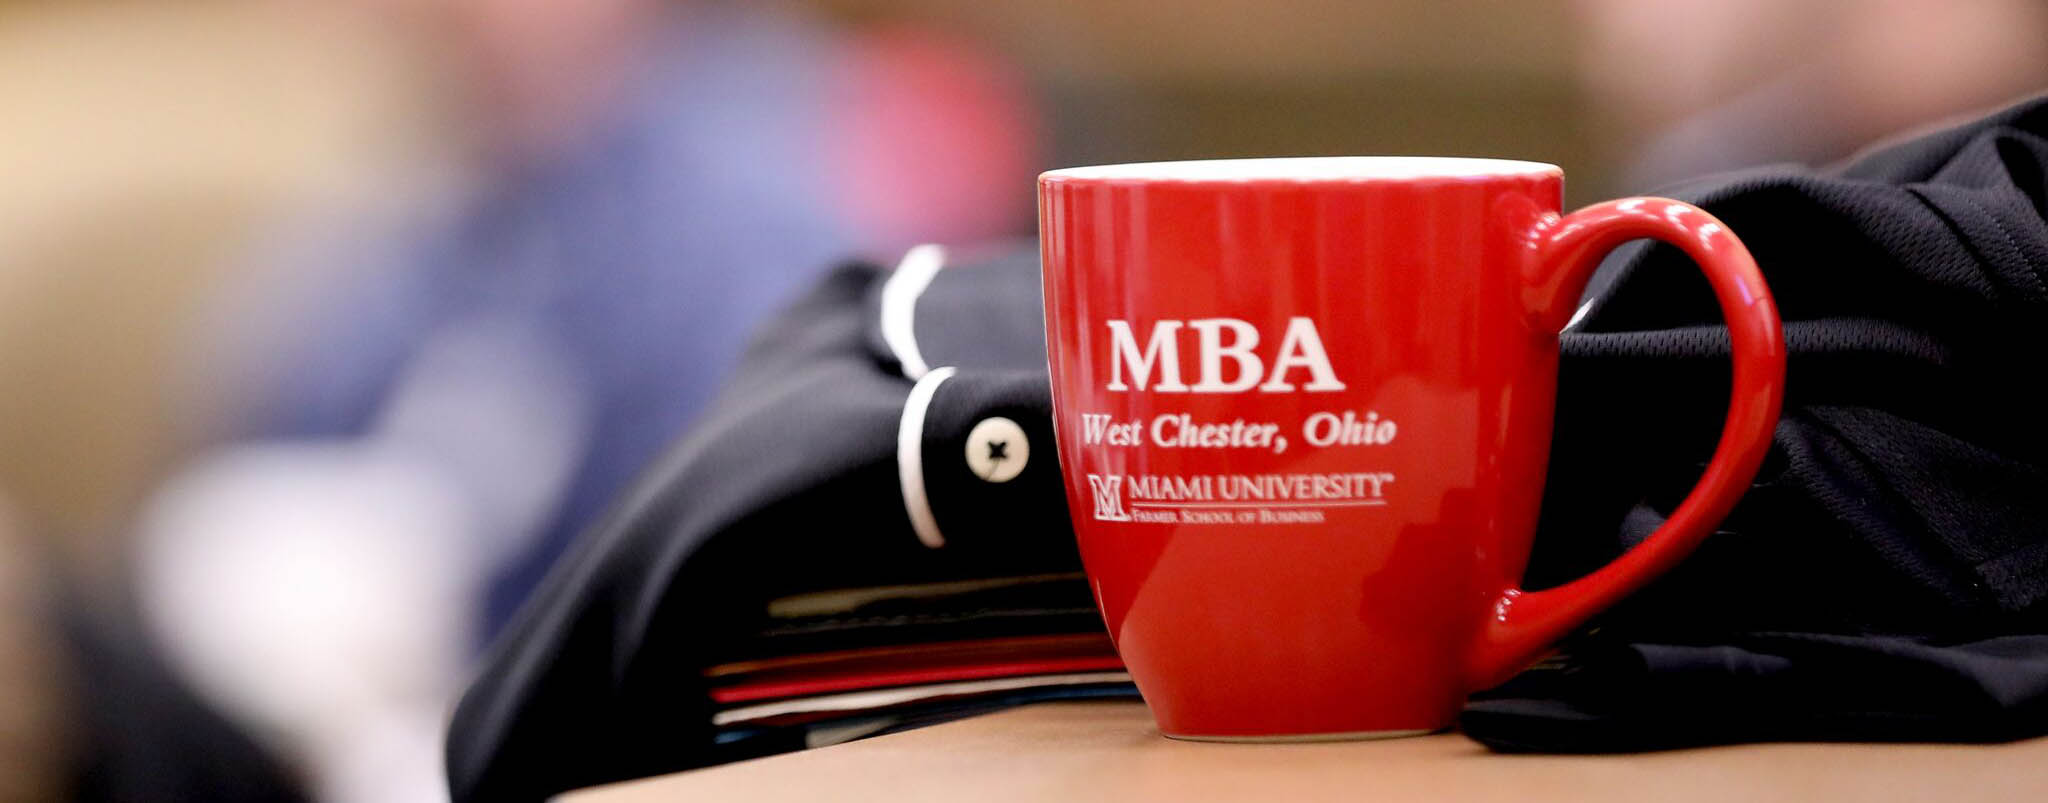 MBA coffee mug